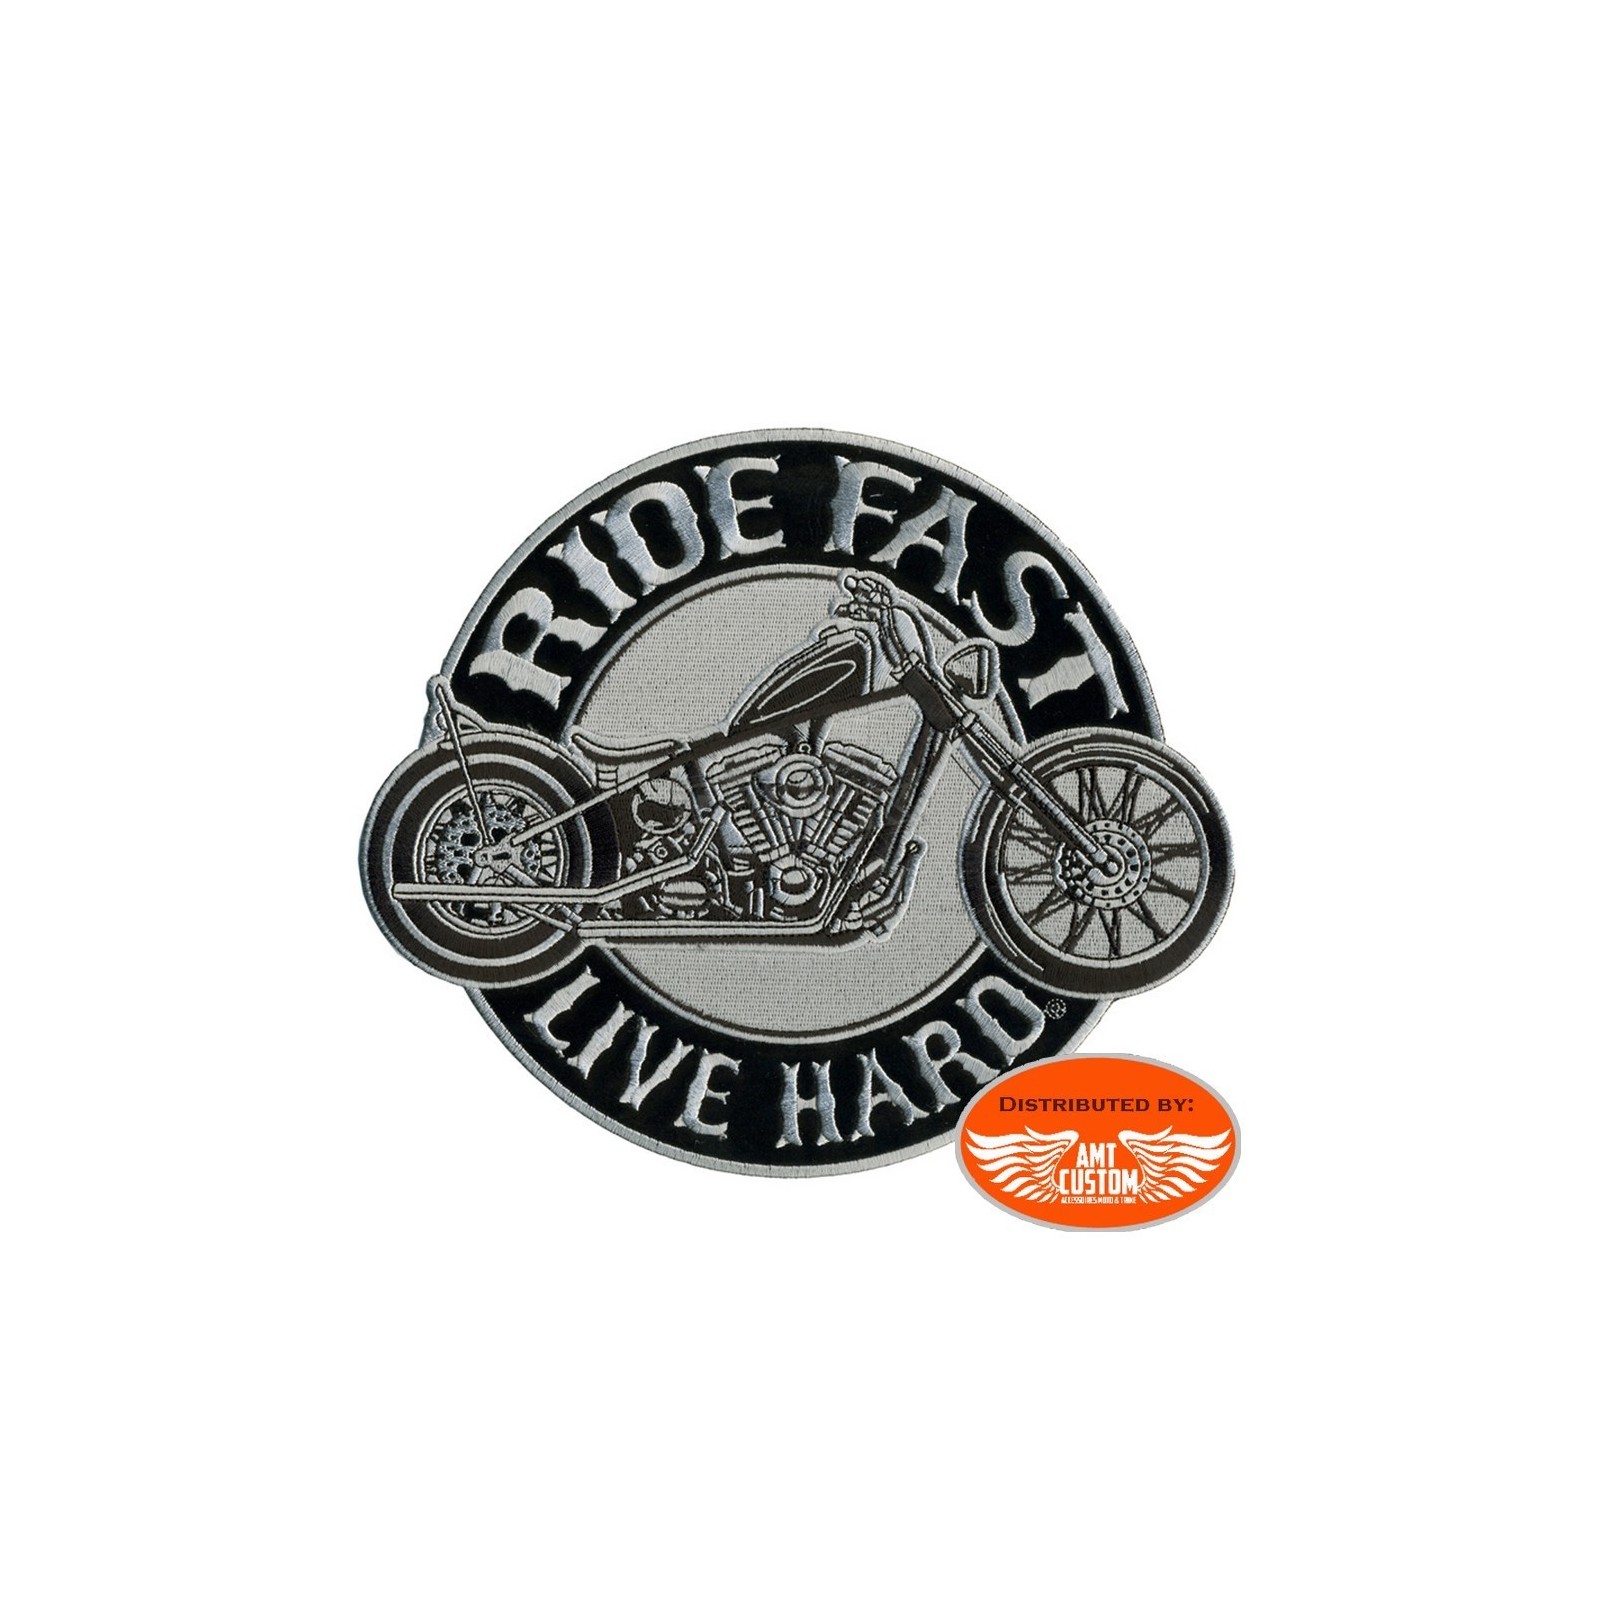 Troc Echange Lot ecusson patch pins broche sacoche gilet holster biker harley  davidson sur